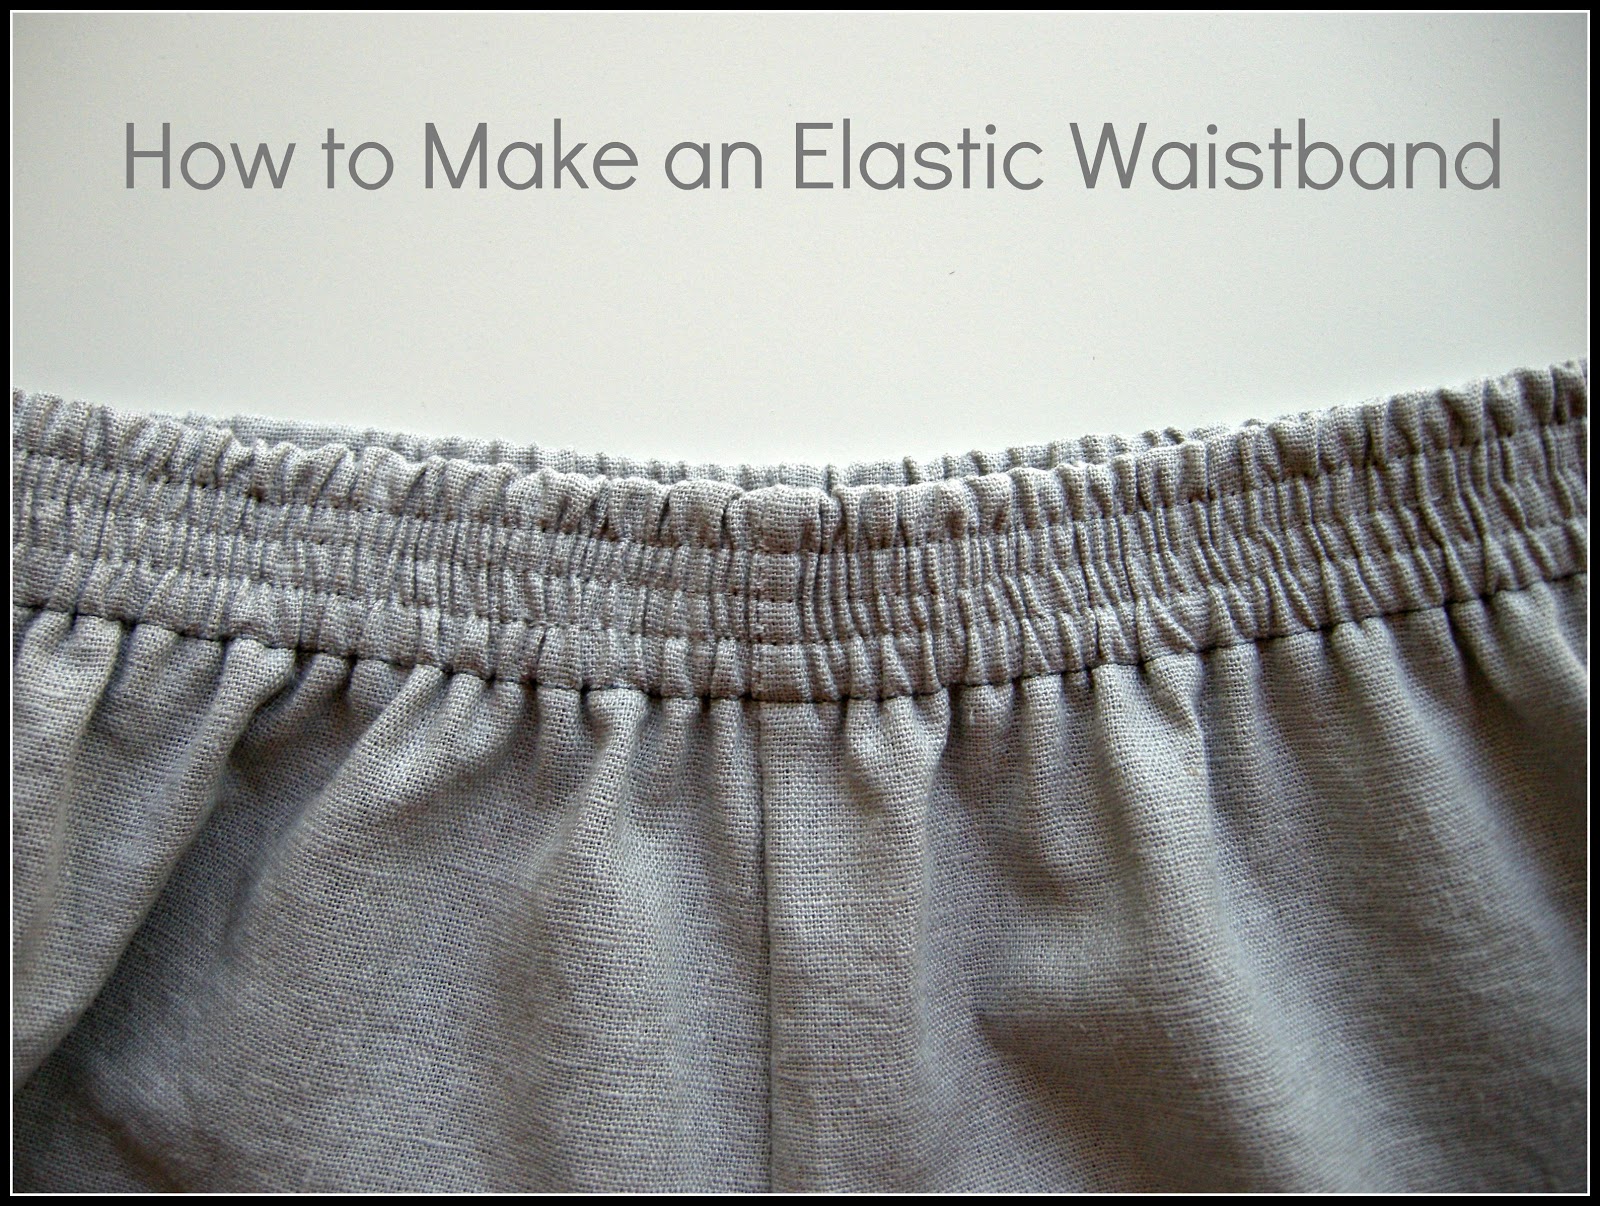 How to Make an Elastic Waistband